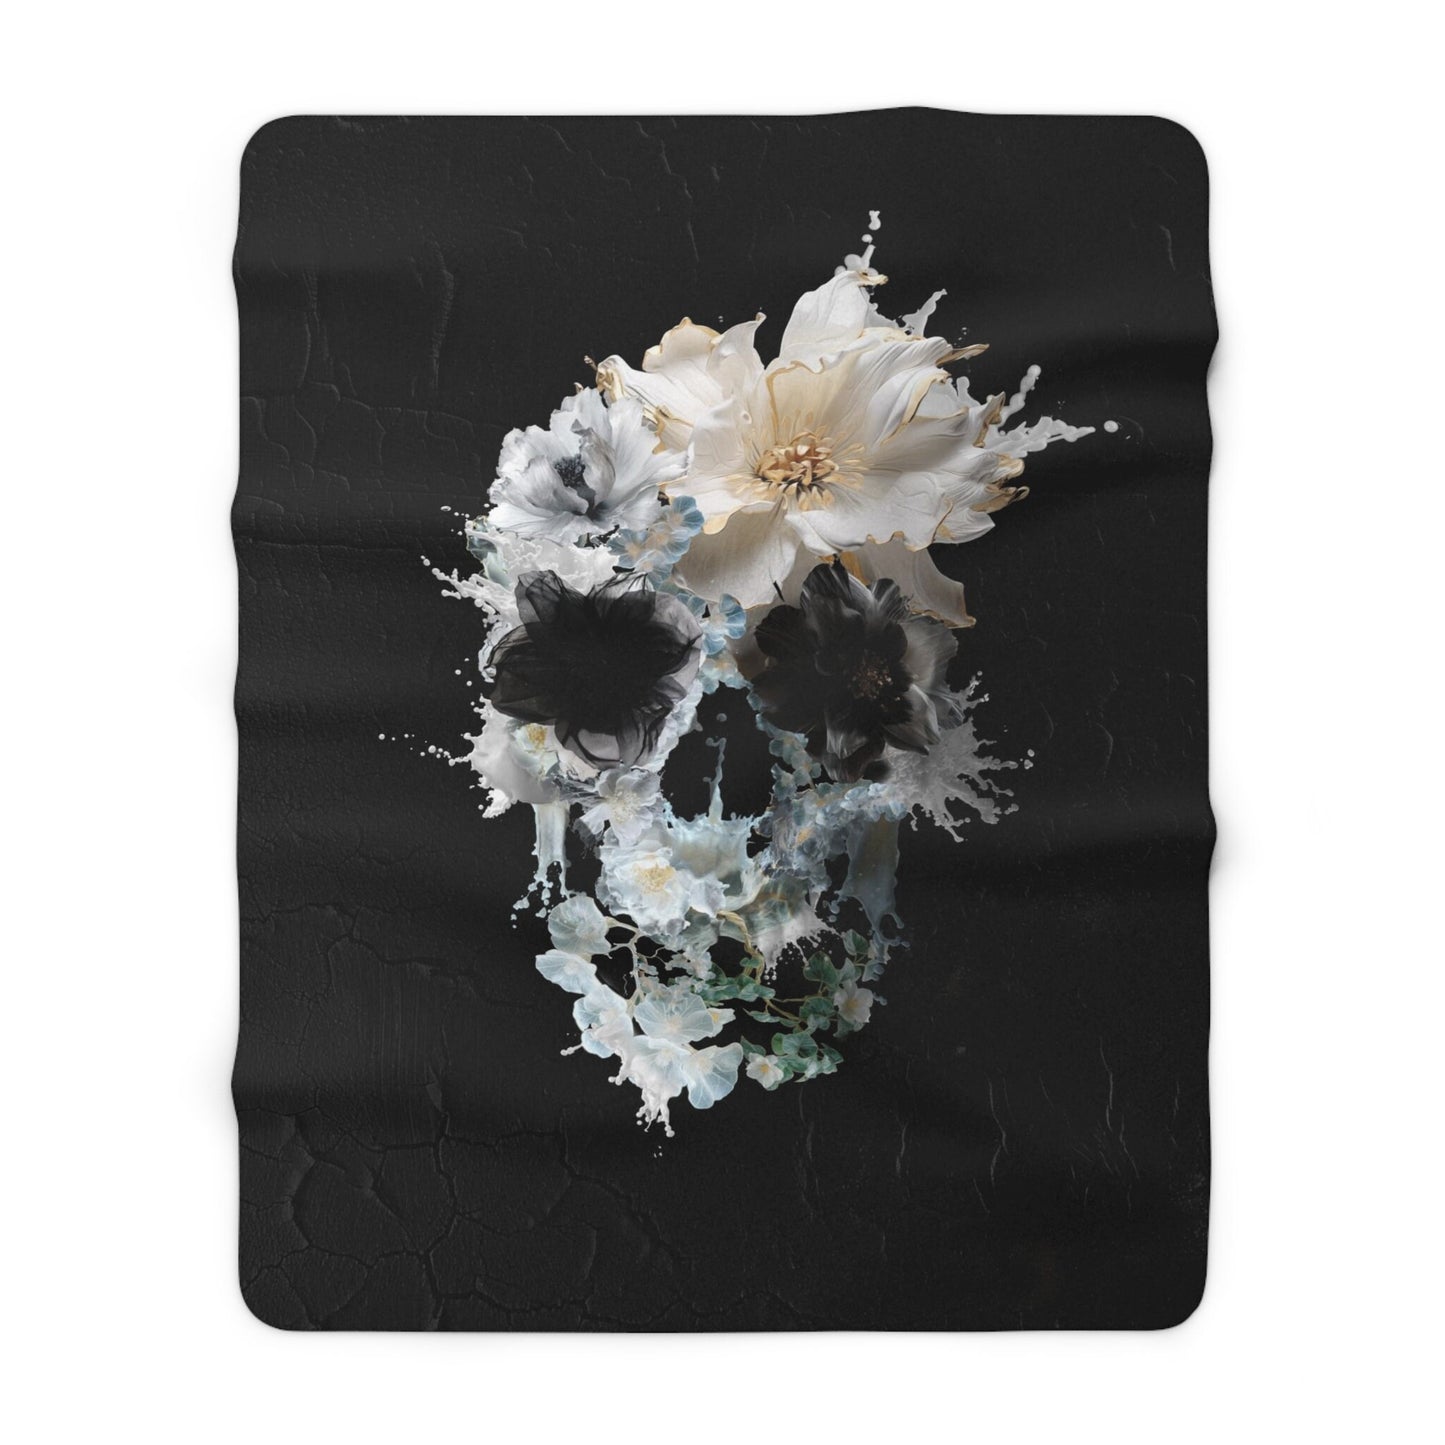 Bloom Sherpa Fleece Blanket, Gothic Skull Cozy Fleece Blanket, Black And White Floral Skull Blanket, Plush Back Fluffy Throw Blanket